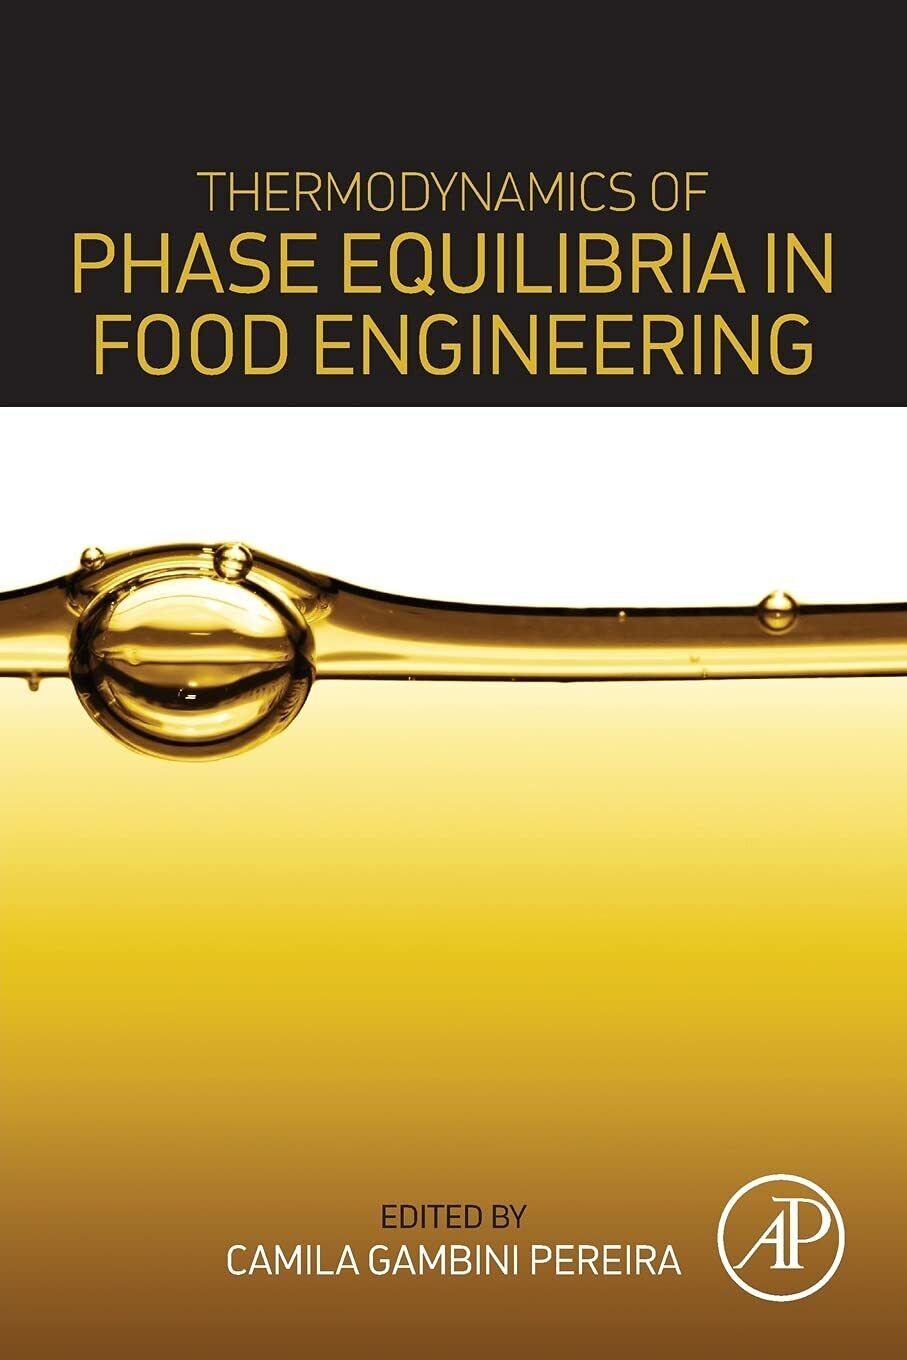 Thermodynamics of Phase Equilibria in Food Engineering - Pereira - 2018 libro usato